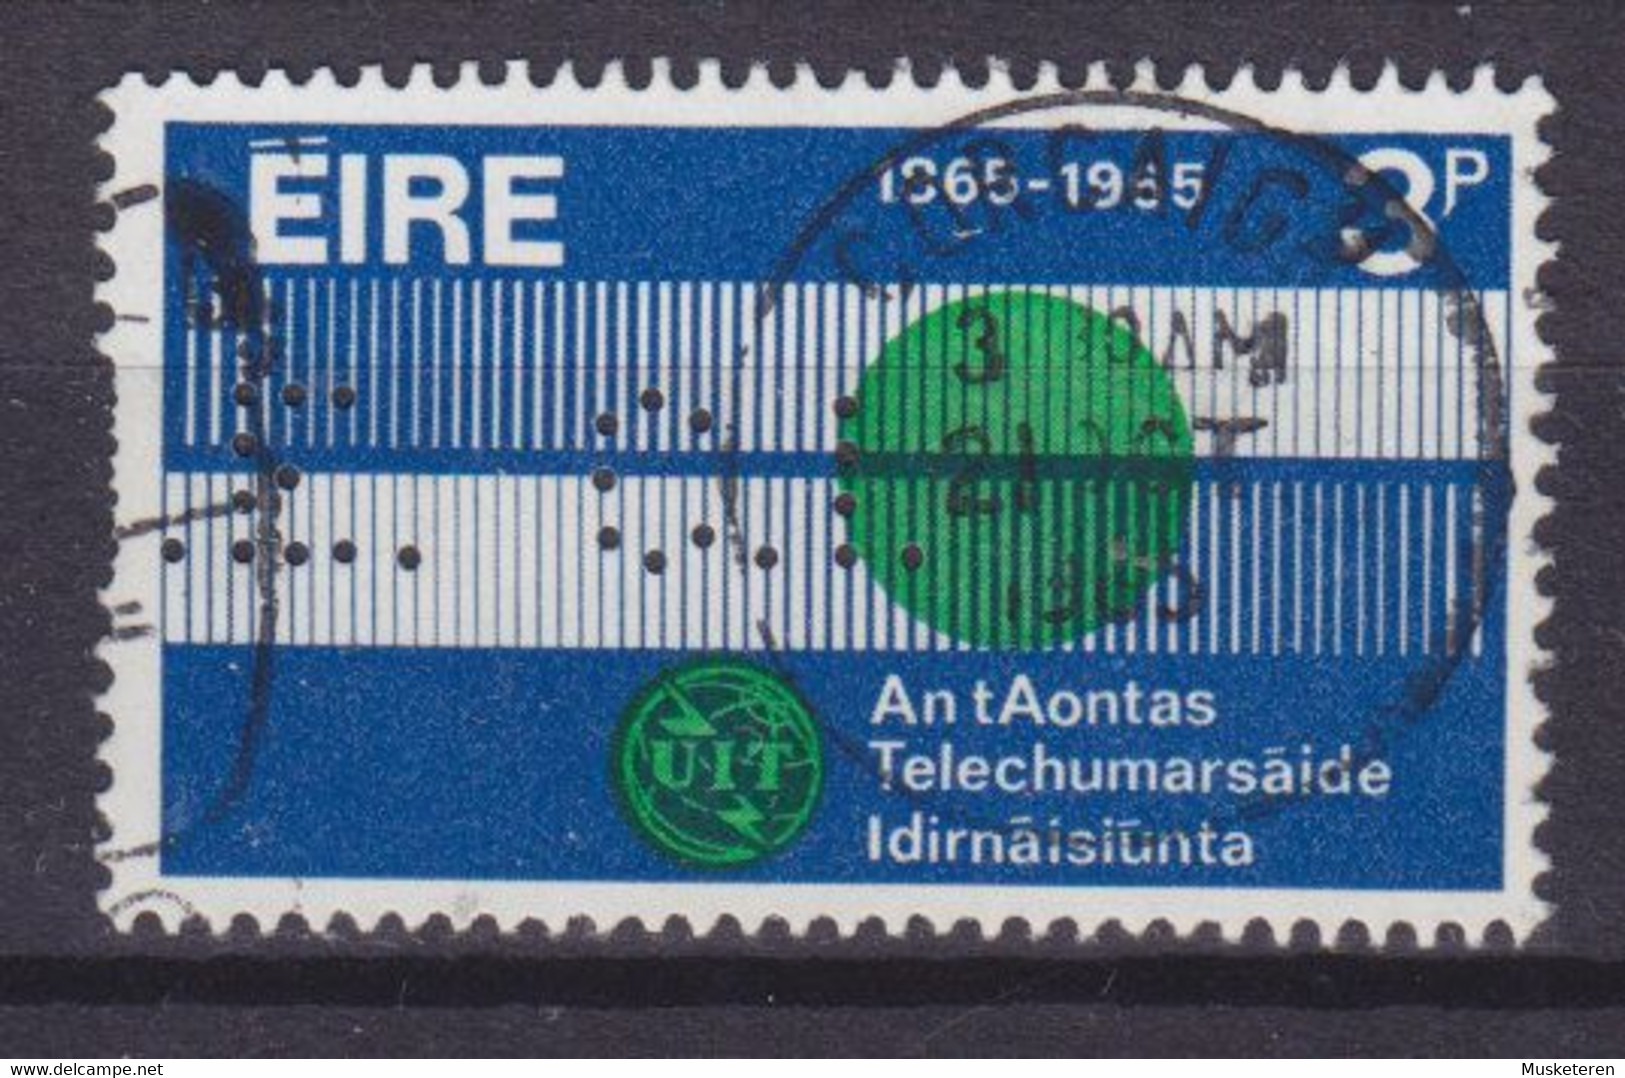 Ireland Perfin Perforé Lochung 'E.C.I.'? ERROR Variety Misplaced Perf. UIT Stamp CORCAIGH Cork 1965 Cancel - Non Dentellati, Prove E Varietà